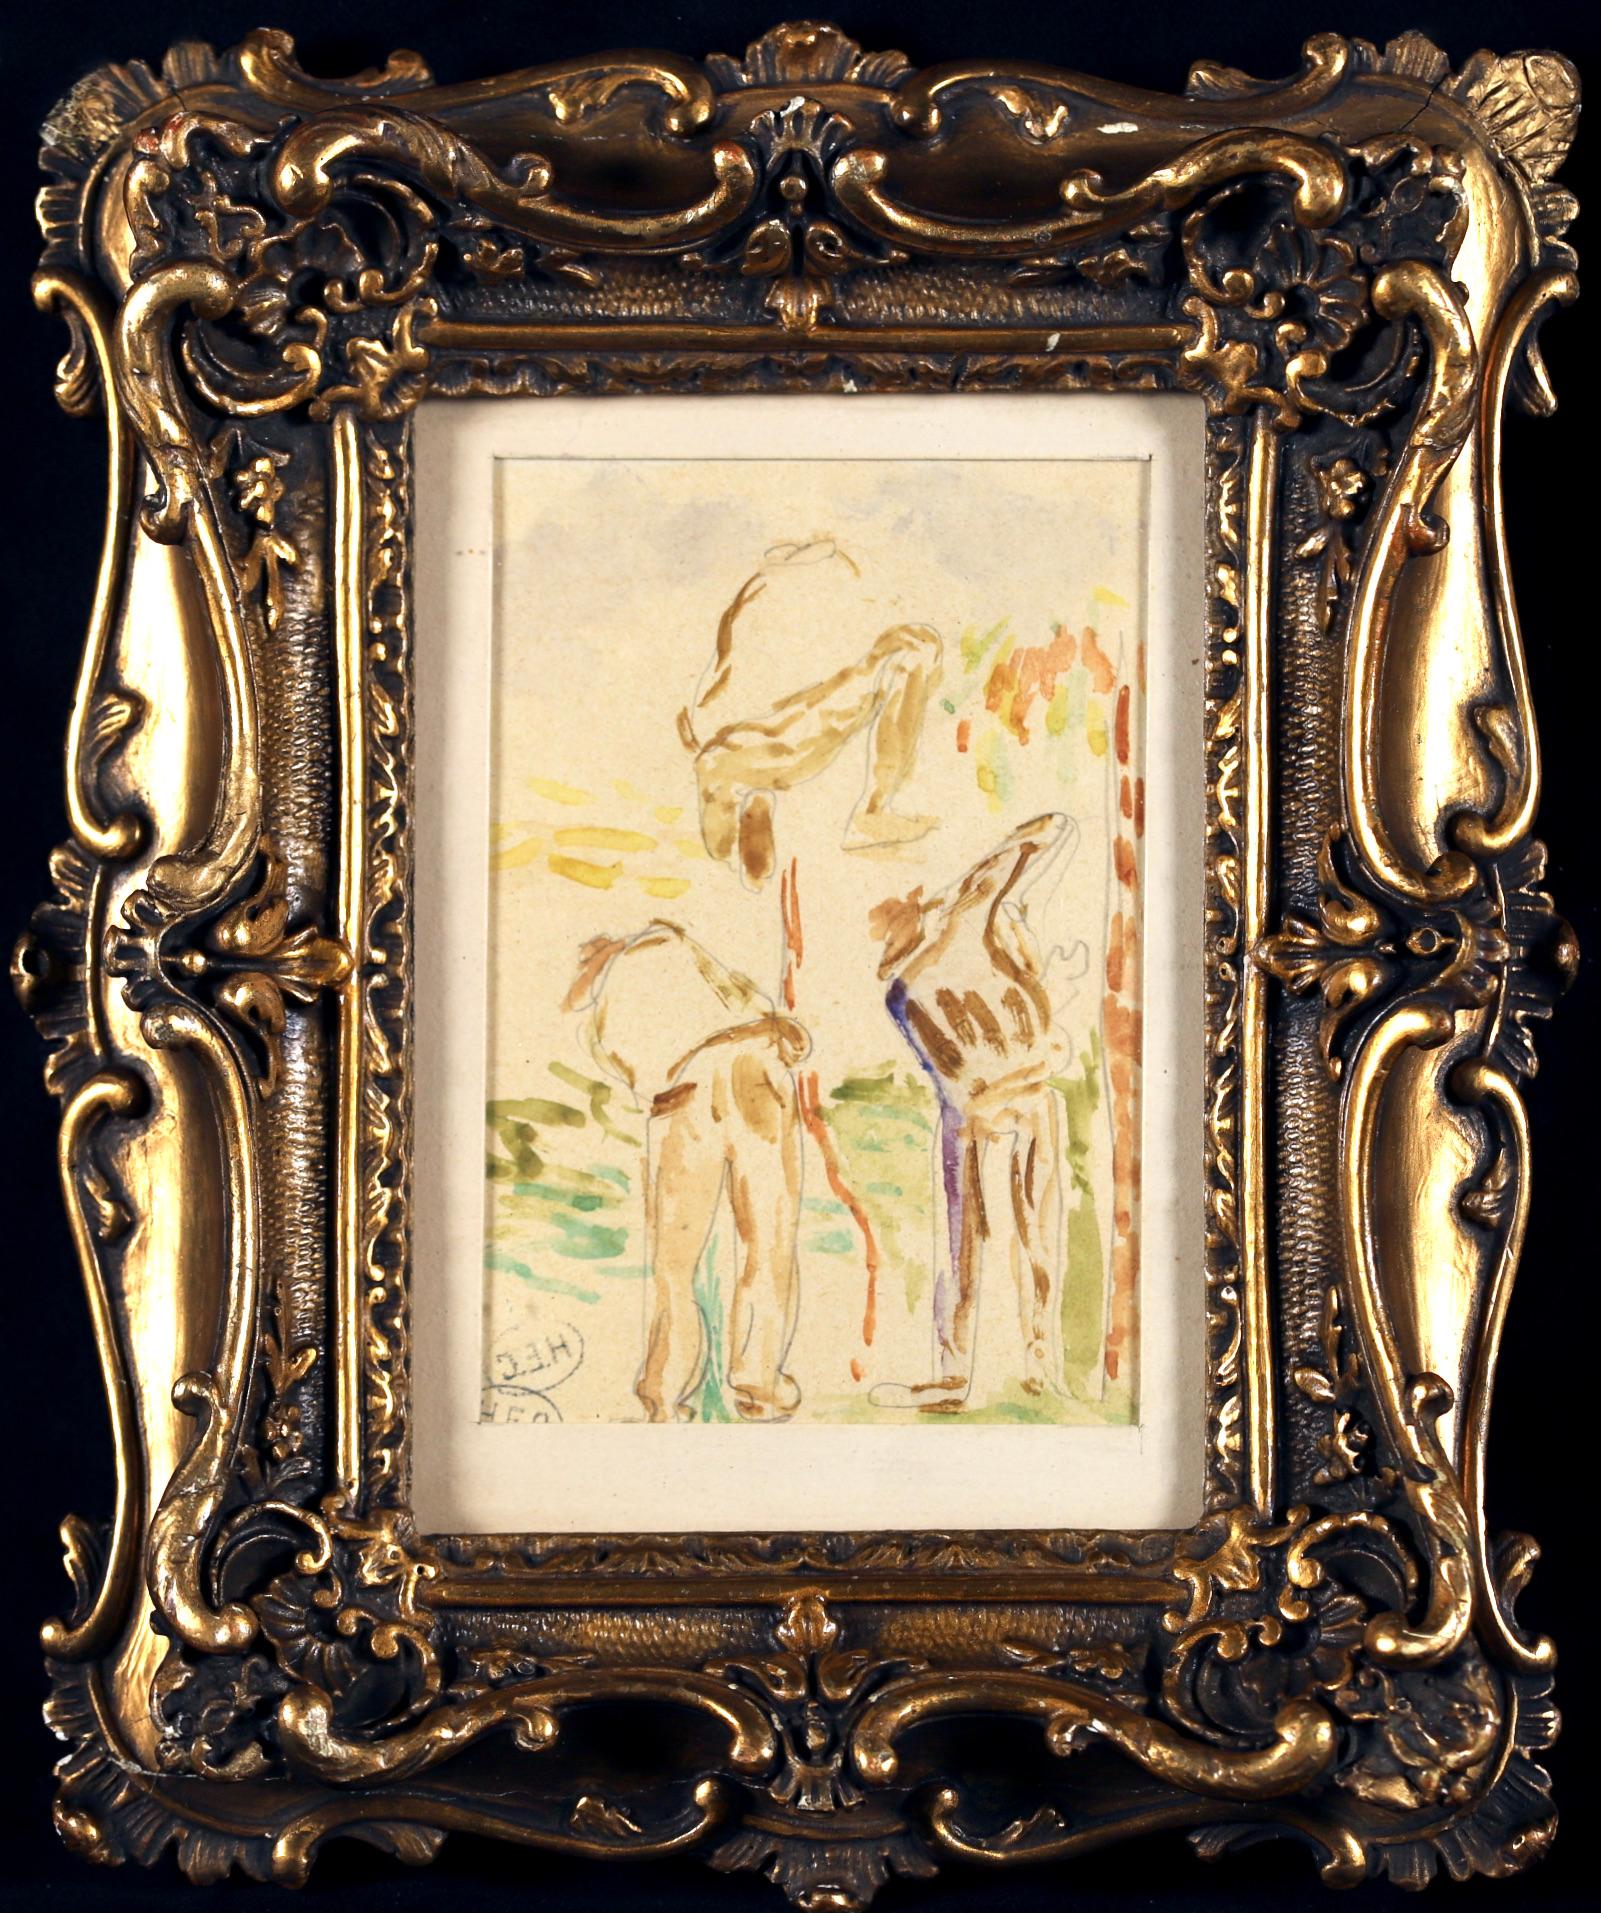 Etude de travailleurs – Impressionistisches figuratives Aquarell von Henri Cross – Painting von Henri Edmond Cross